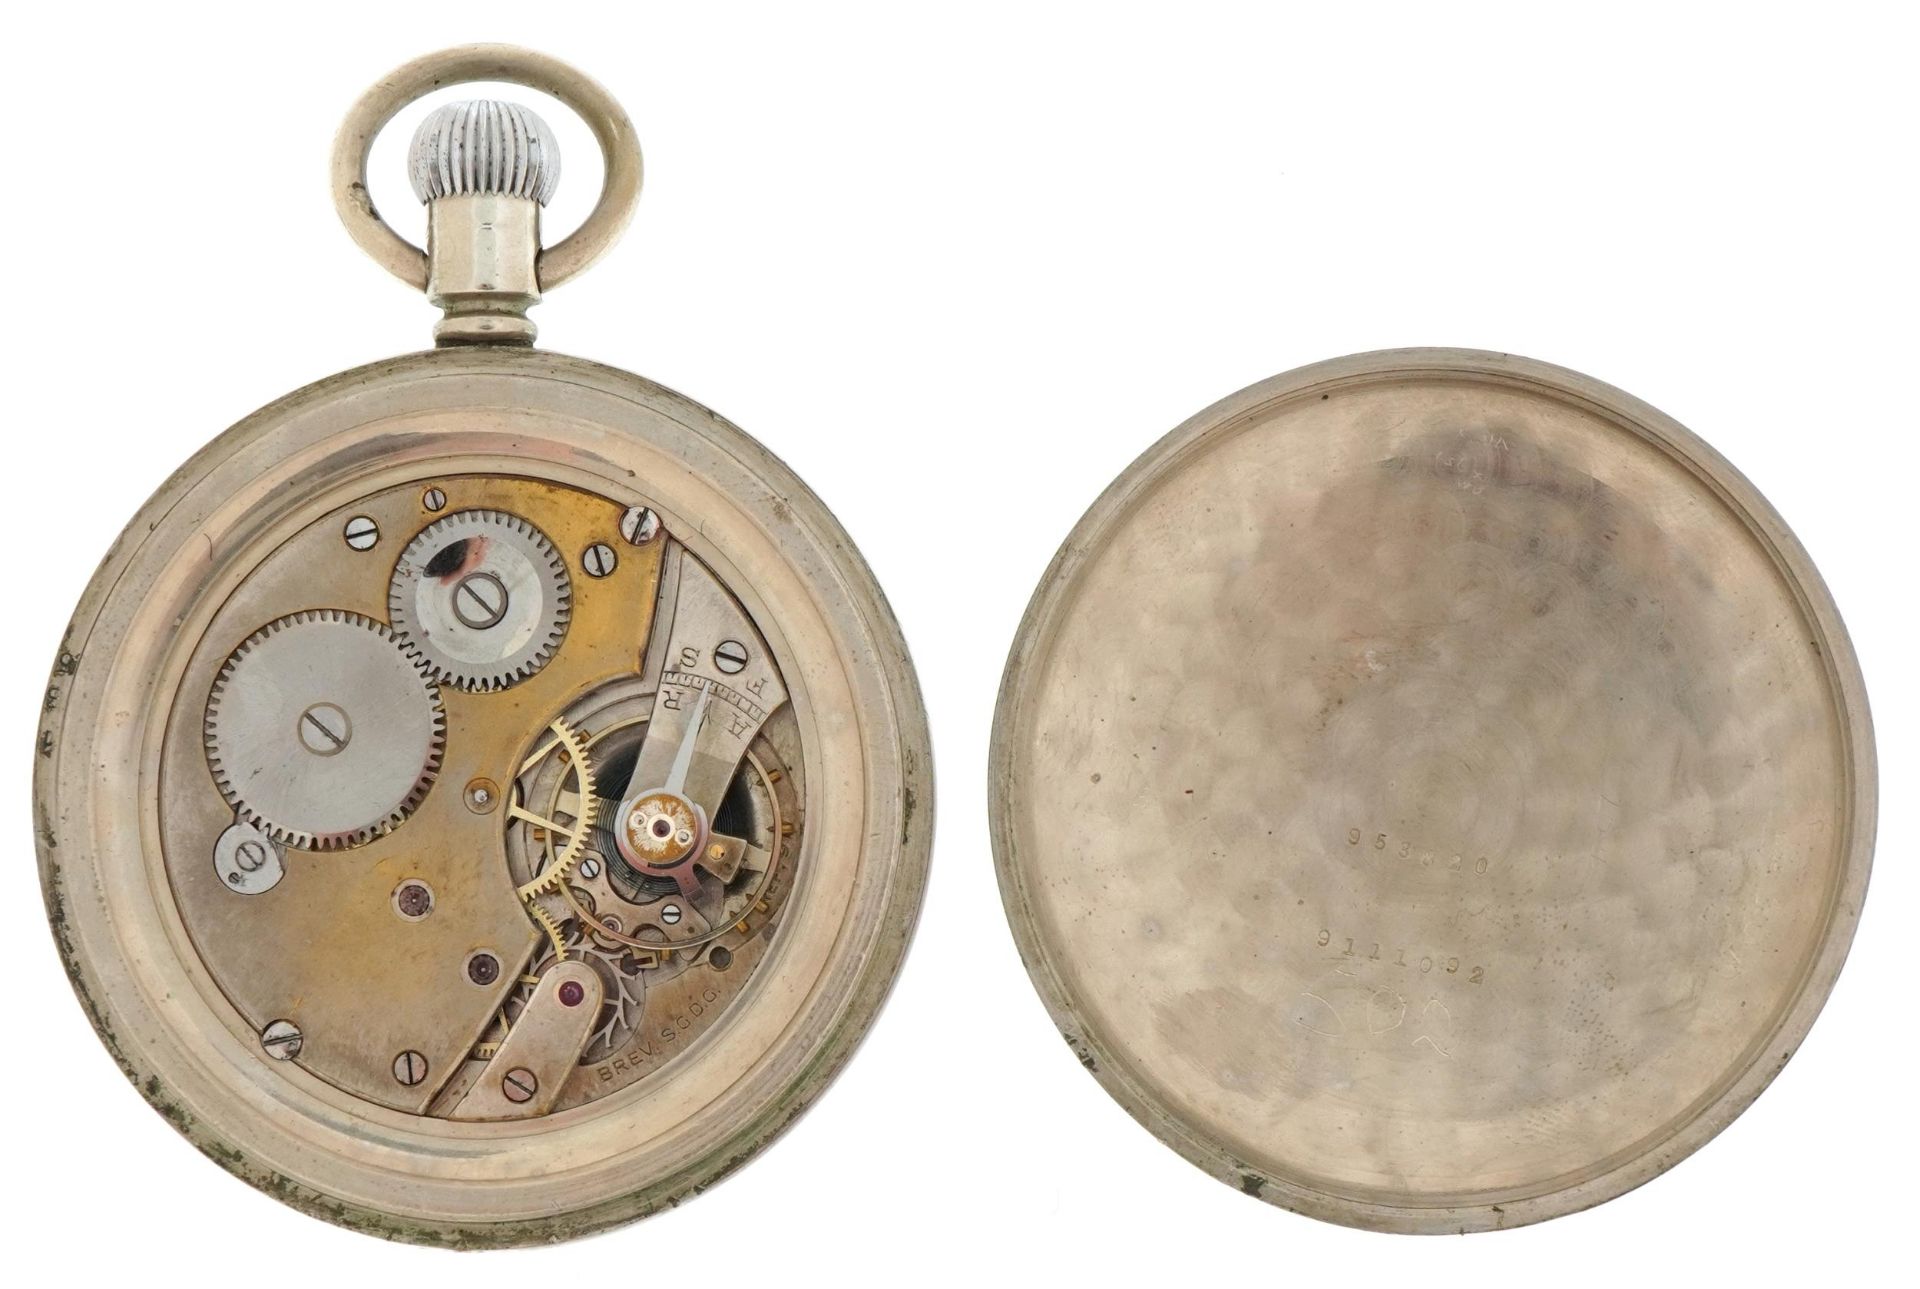 Cyma, vintage Midland & Great Western Railway Island pocket watch engraved M & GW 18 to the back - Image 3 of 4